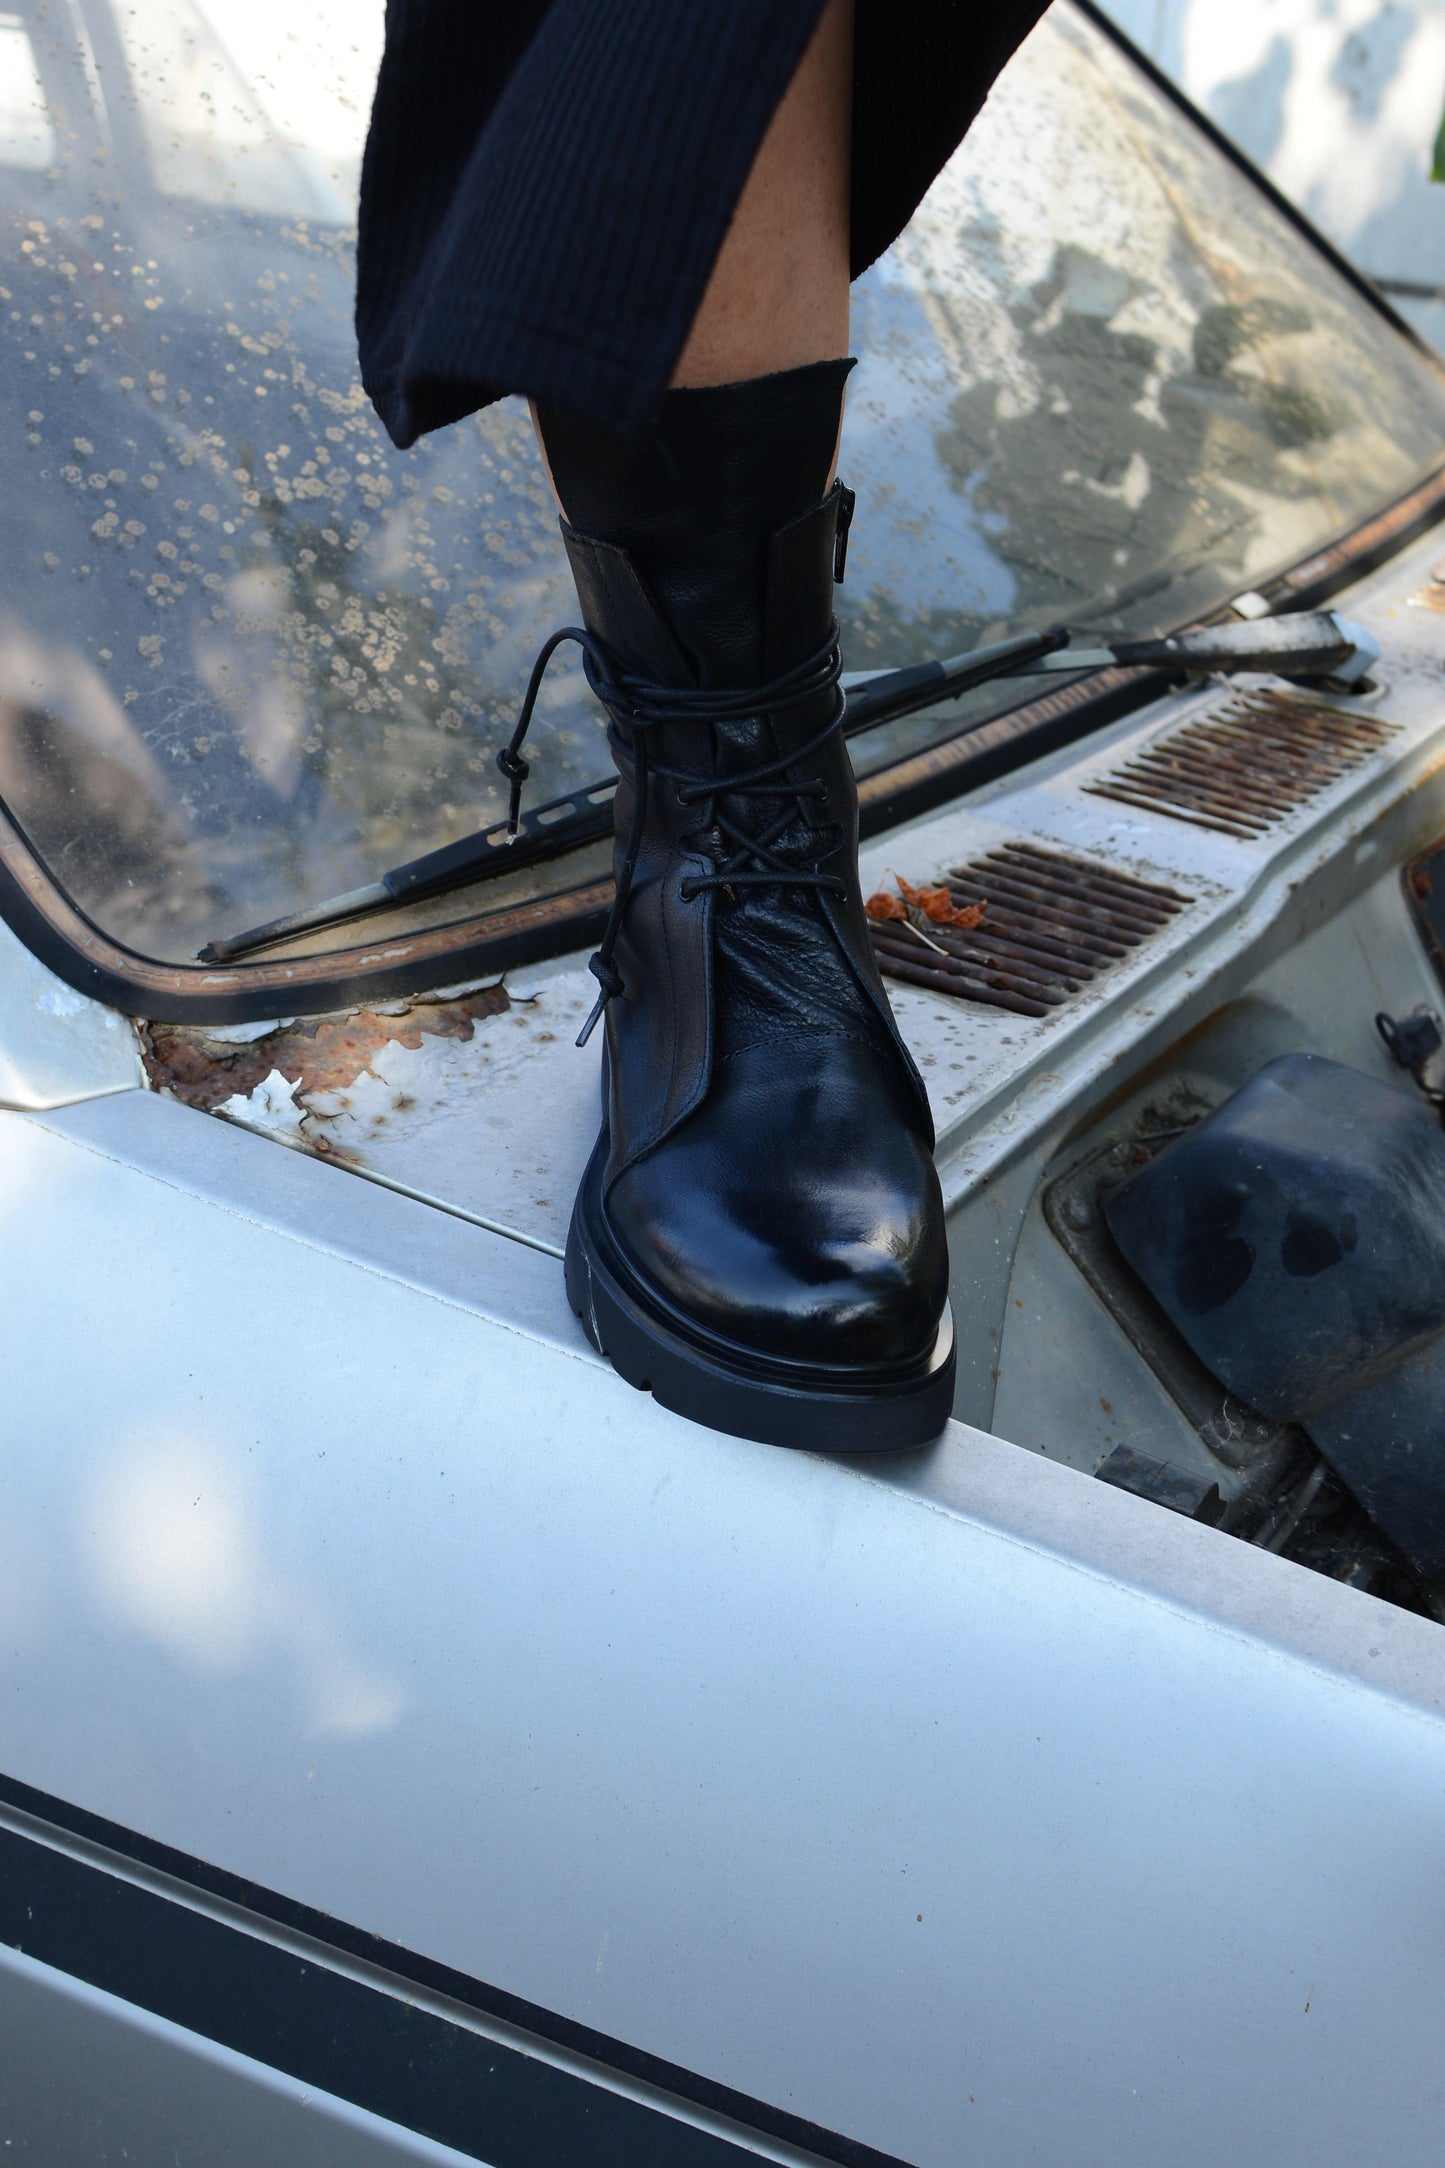 RICH 04  amphibian ankle boots leather ATLANTICK - History541